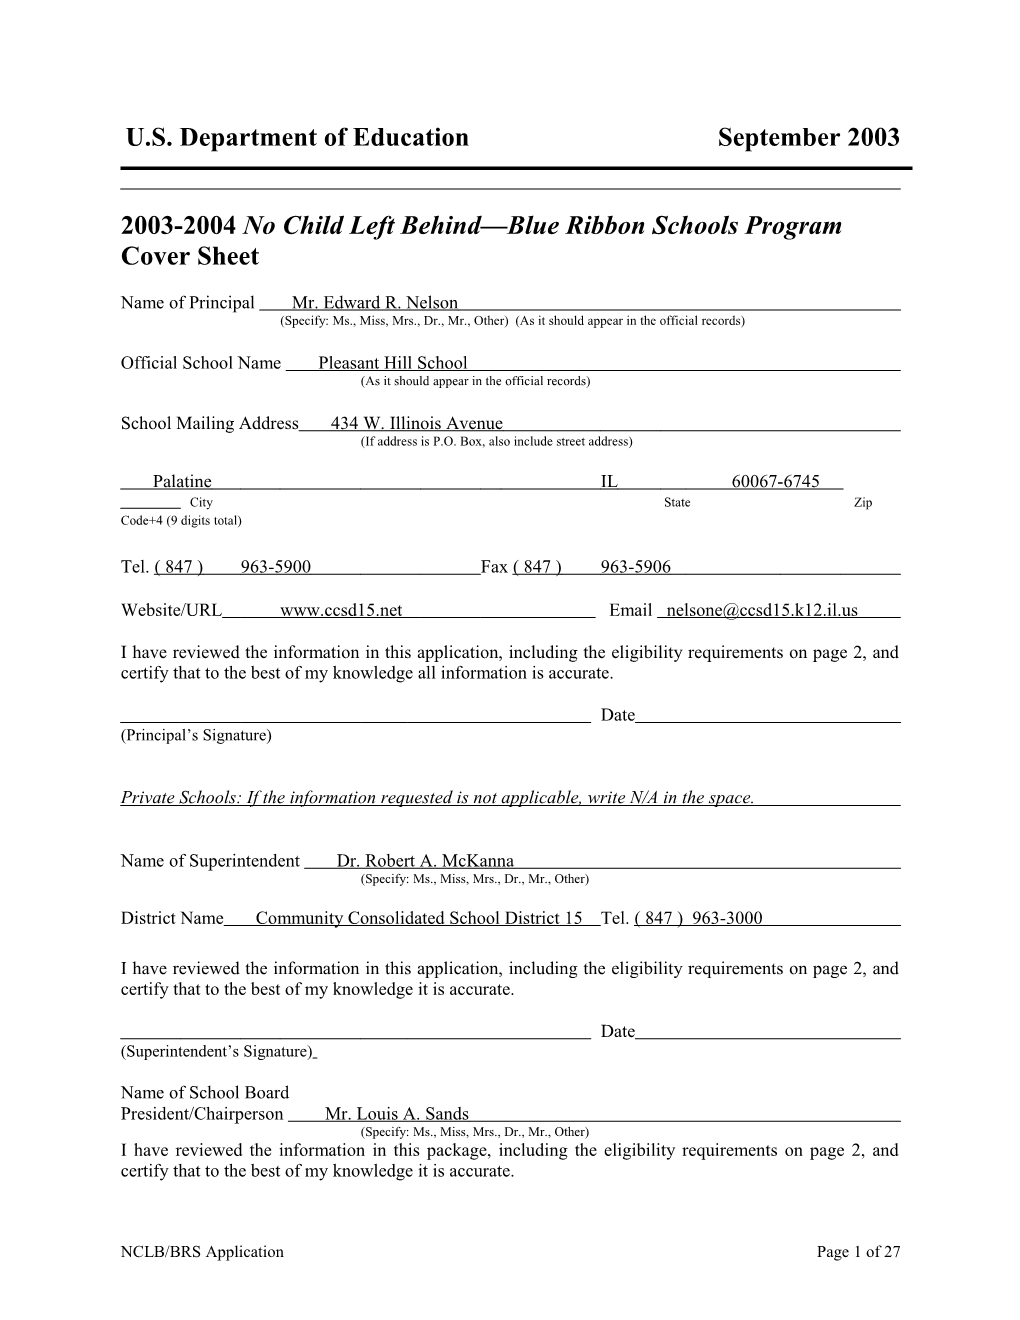 Pleasant Hill Elementary School 2004 No Child Left Behind-Blue Ribbon School Application